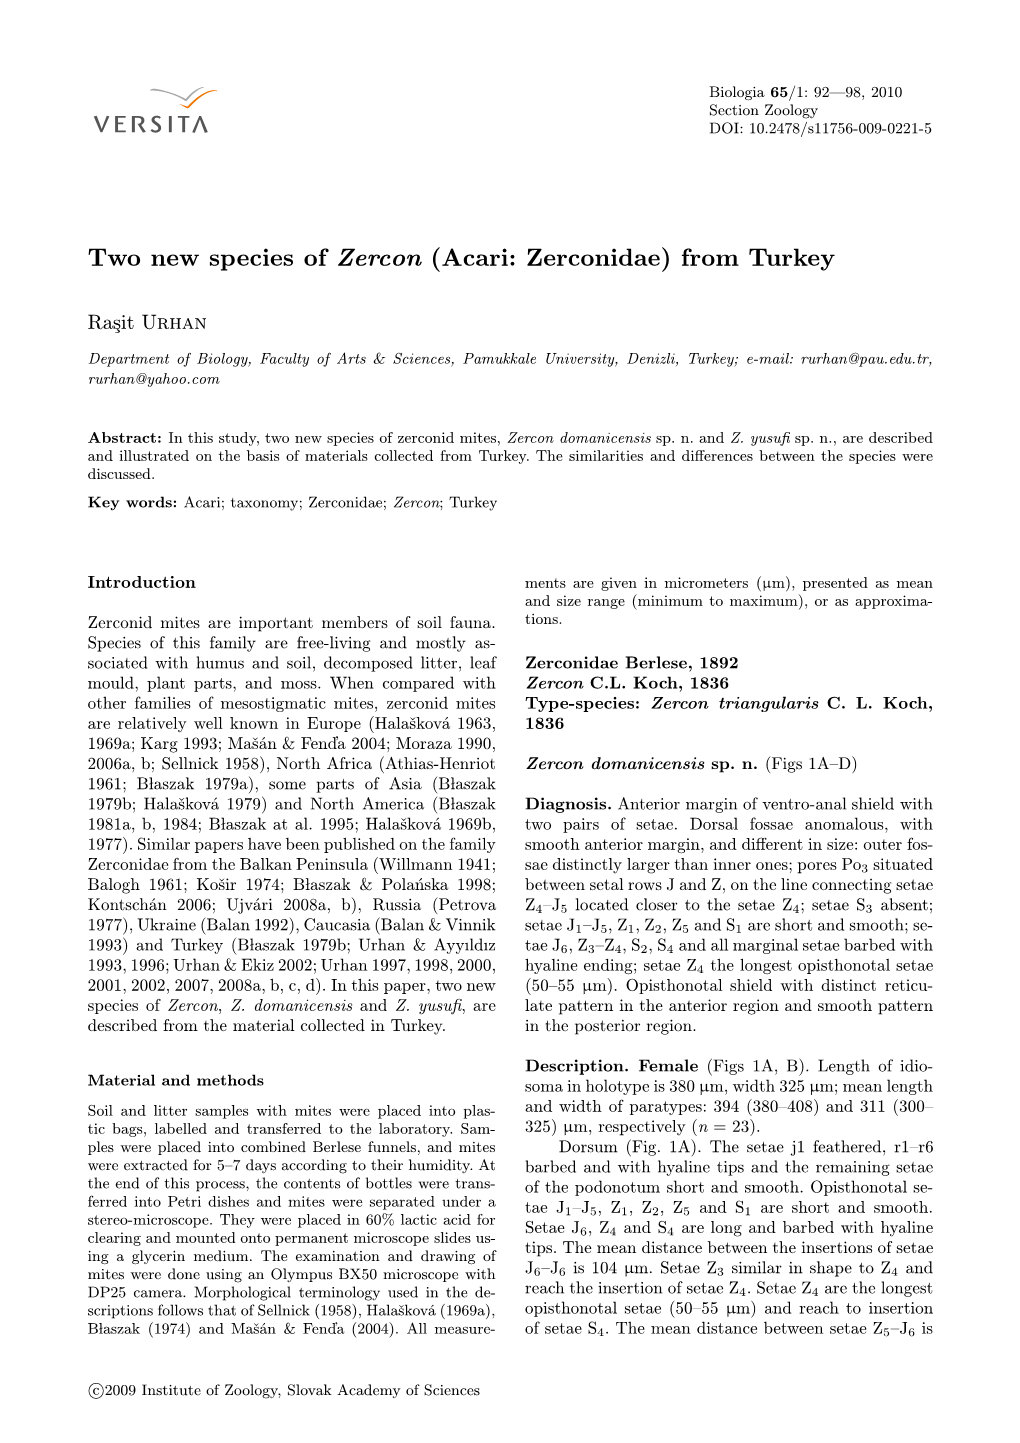 Two New Species of Zercon (Acari: Zerconidae) from Turkey